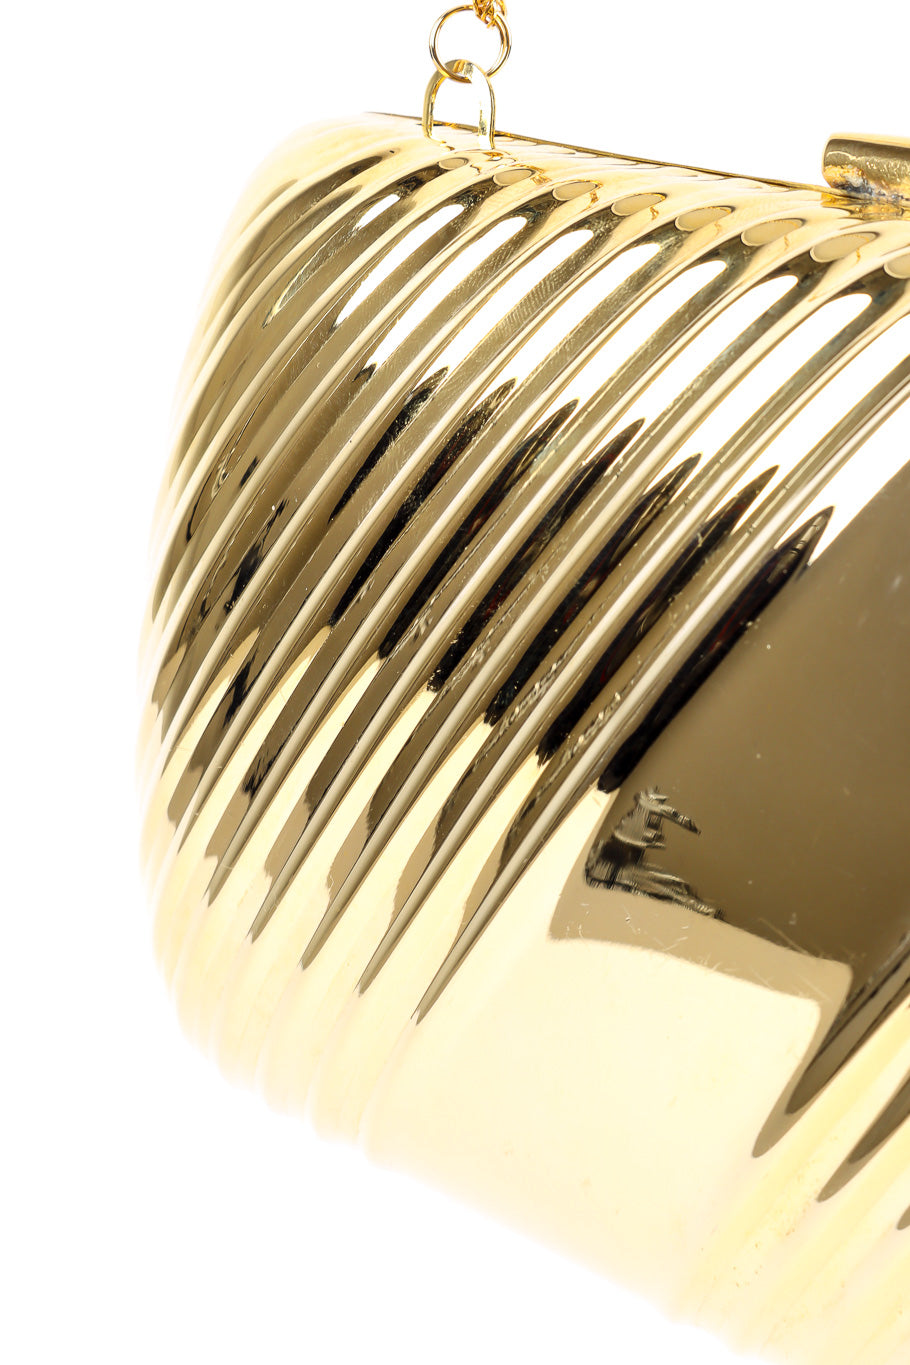 Venizia rectangular metal shape clutch close-up detail @recessla